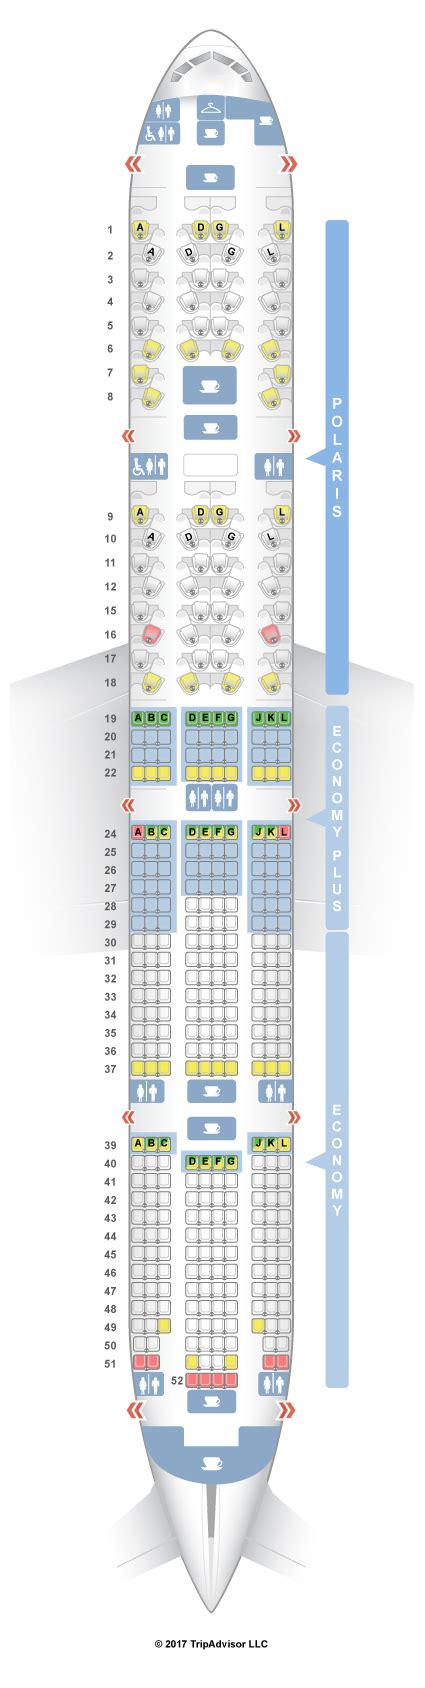 Boeing 777 Emirates Seating Plan Economy Class Emirates Boeing 777